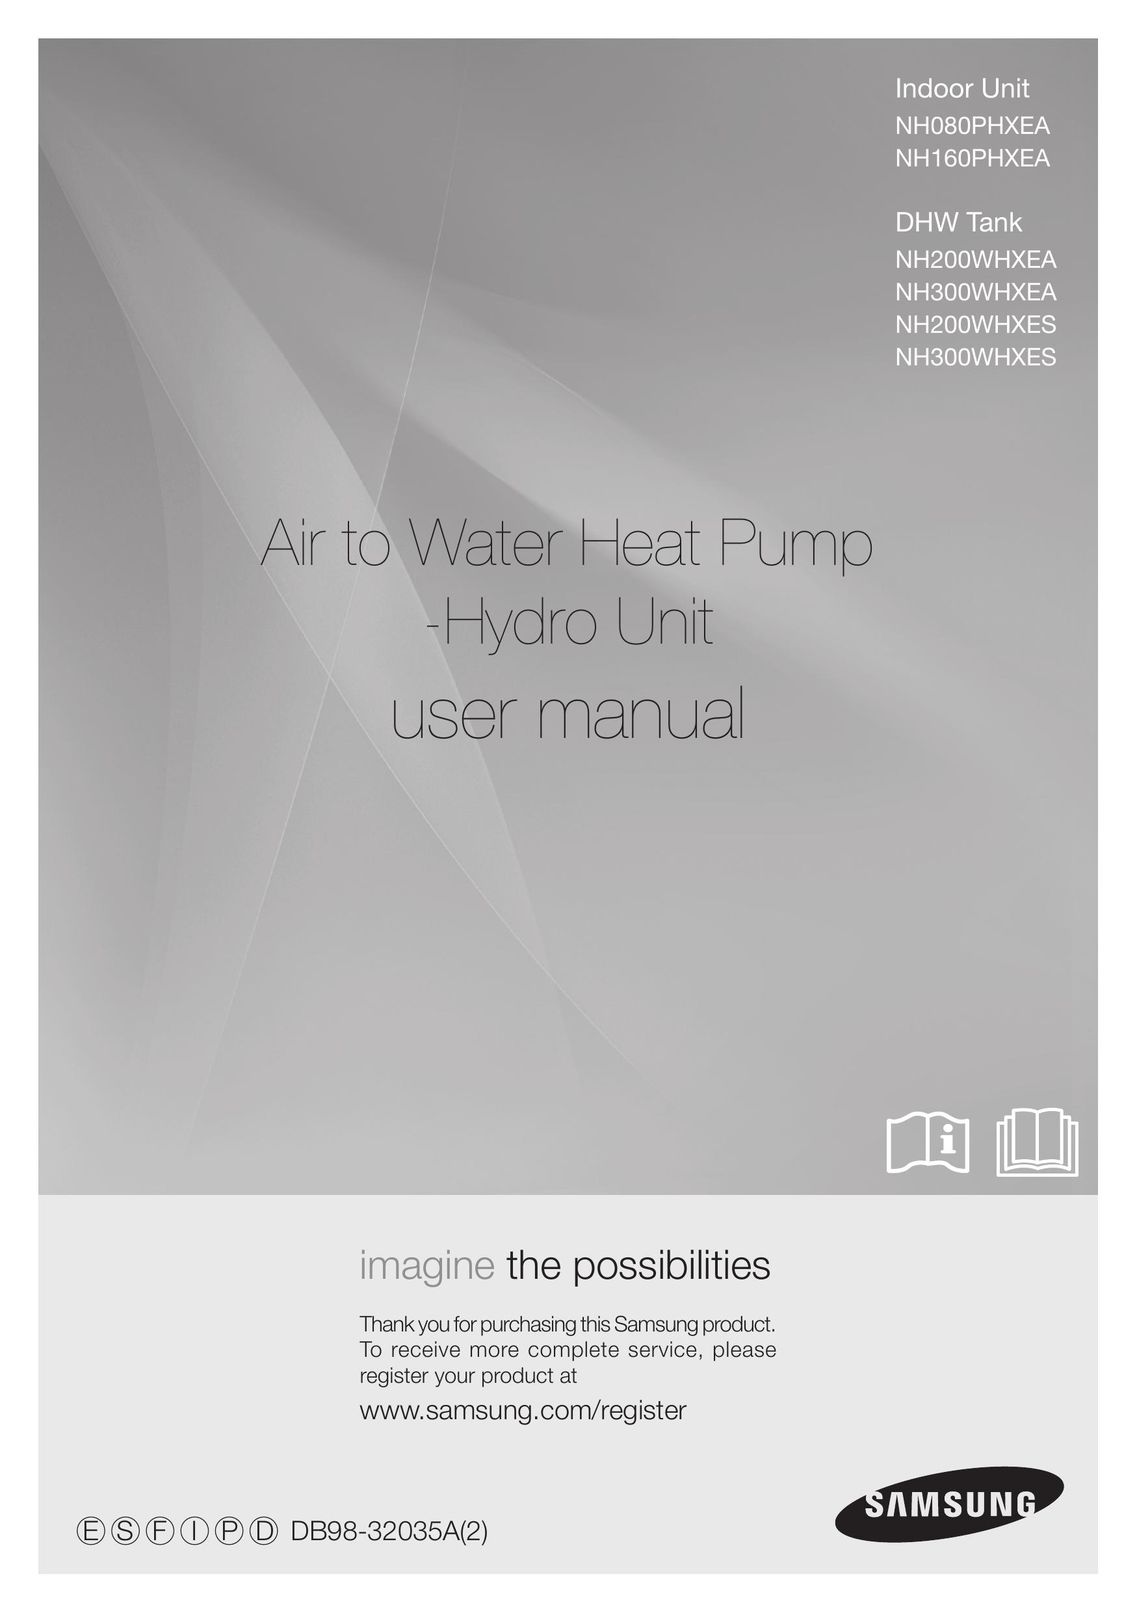 Samsung NH200WHXEA Heat Pump User Manual